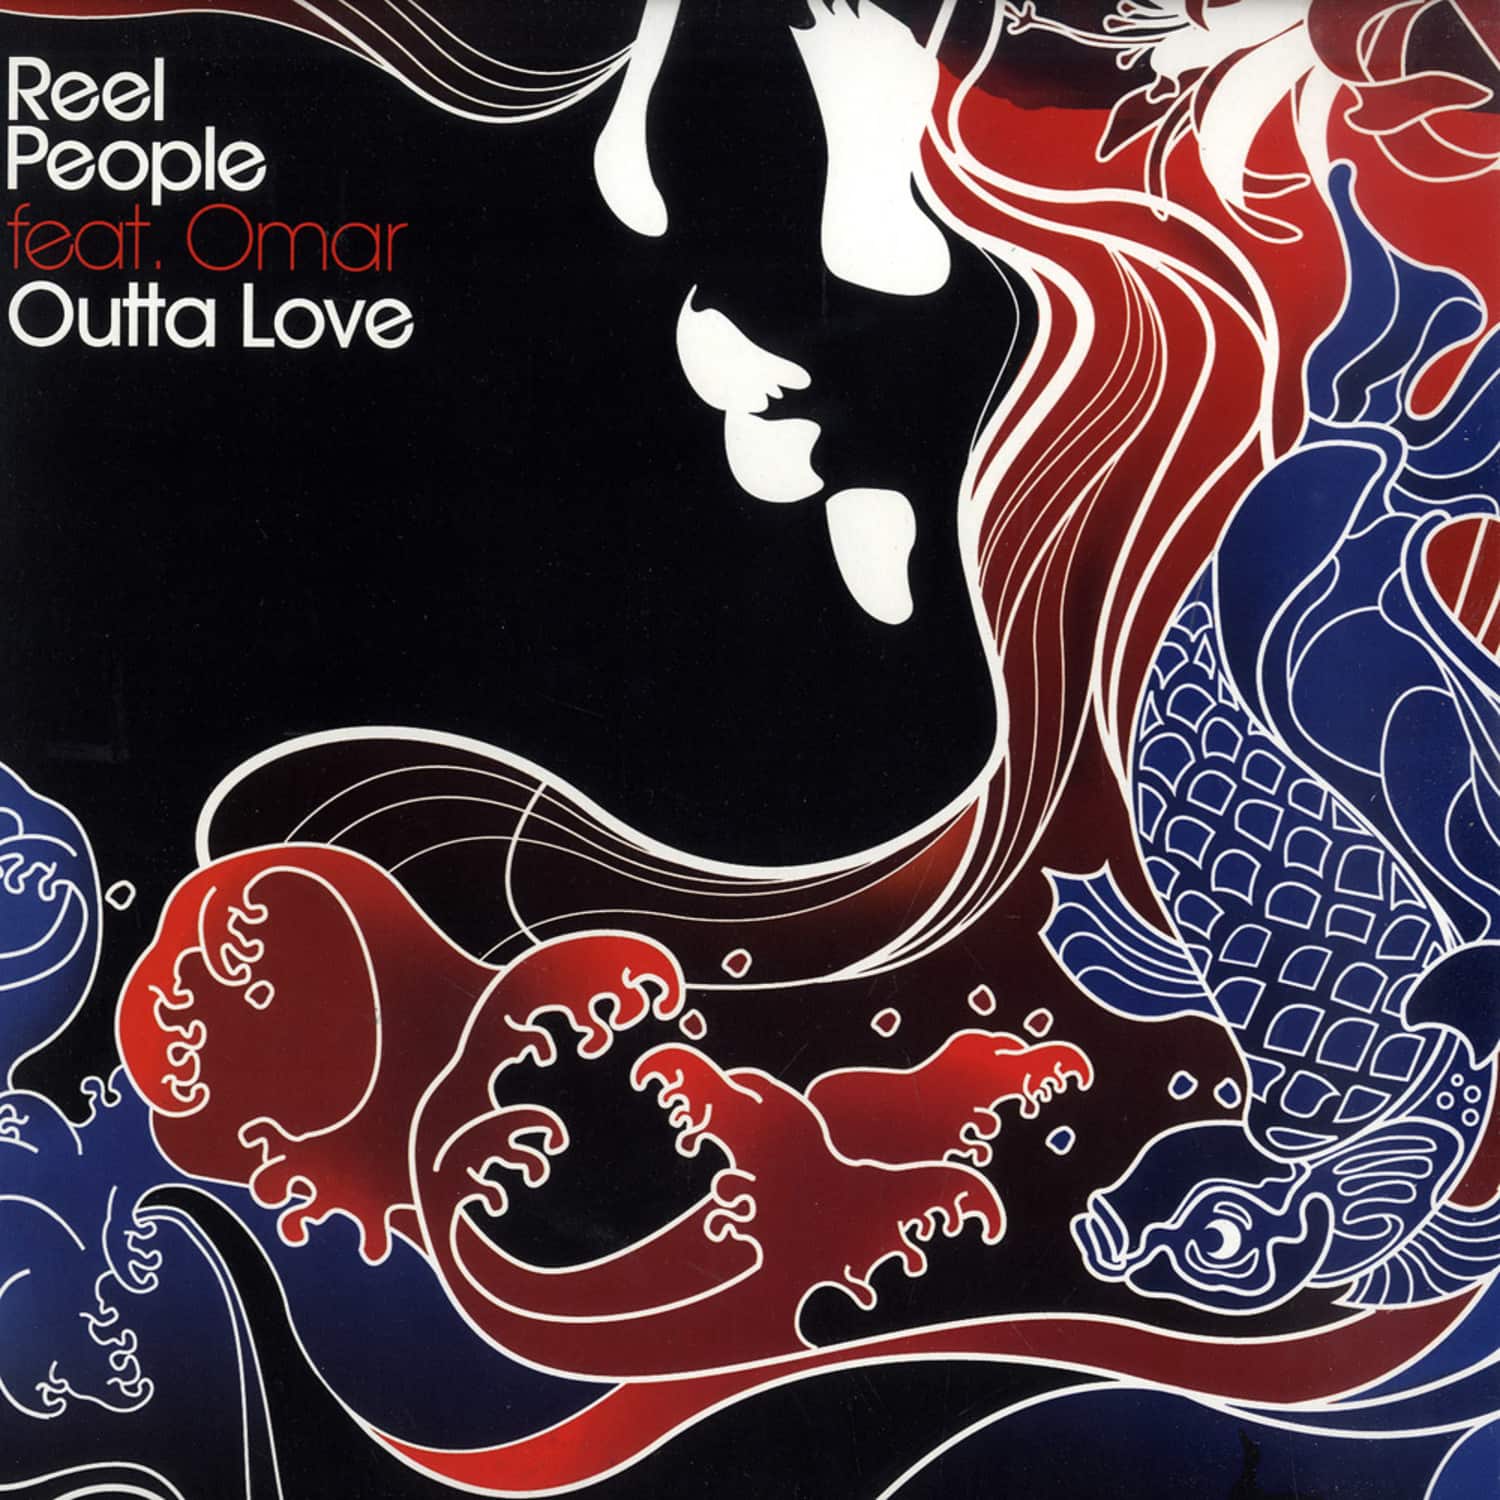 Reel People feat. Omar - OUTTA LOVE REMIXES